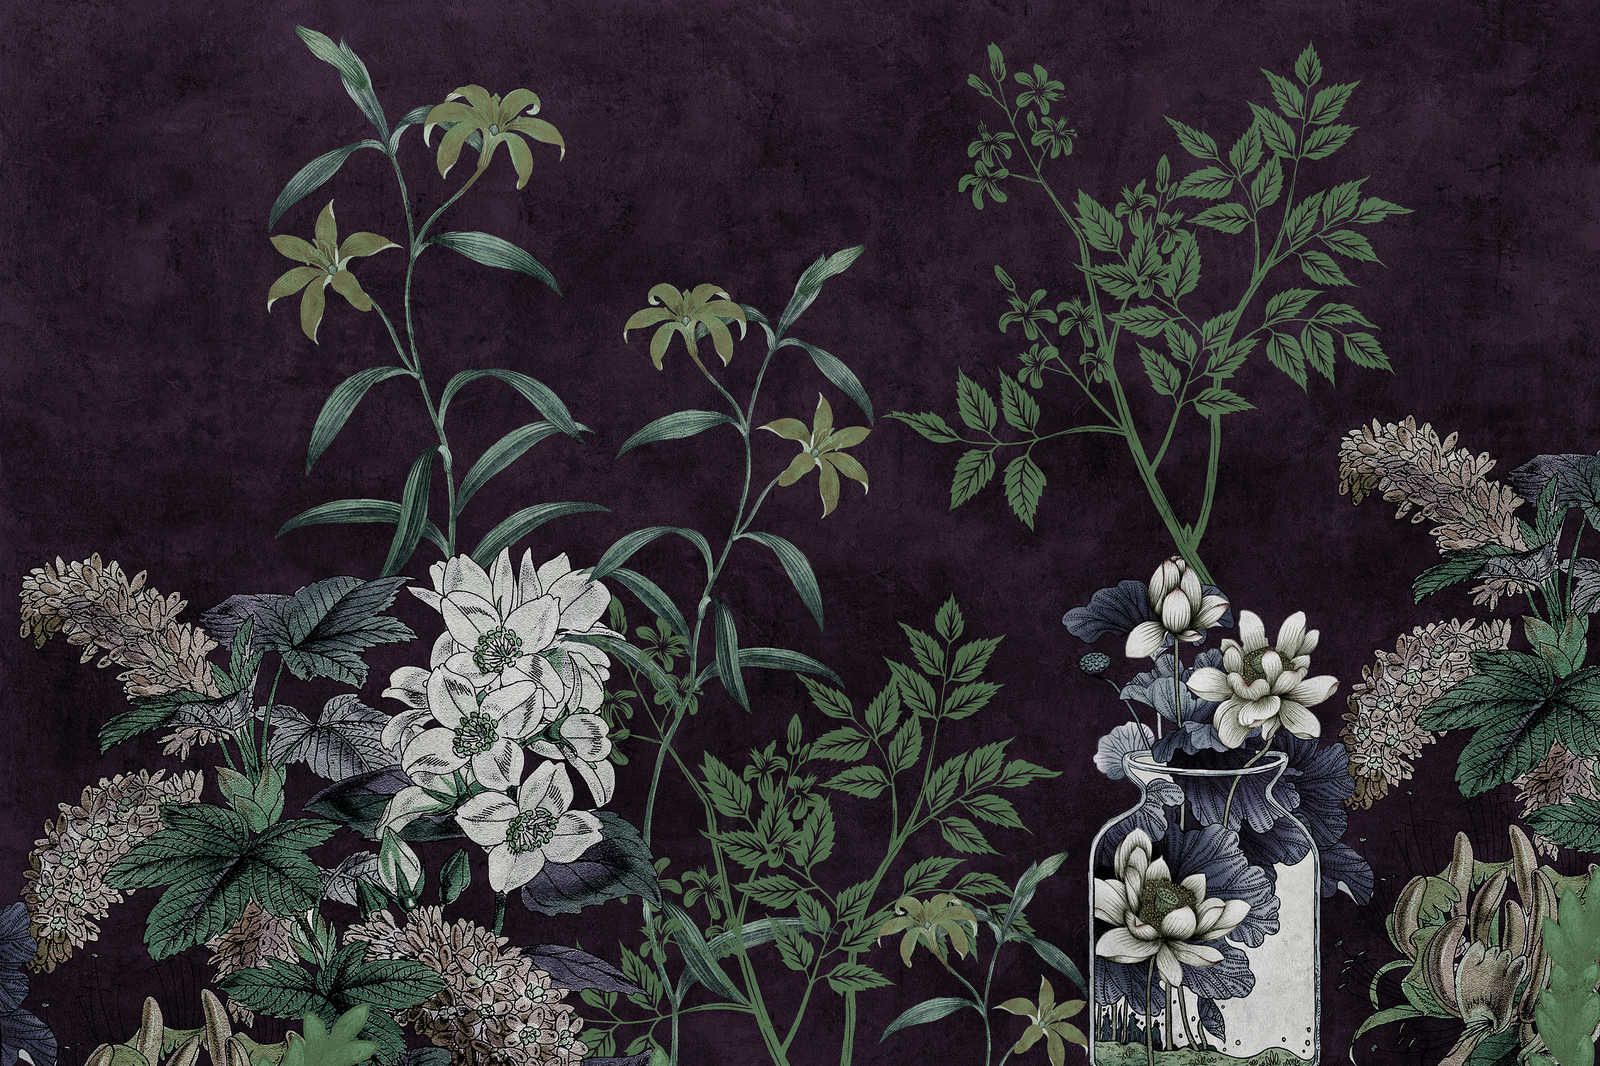             Dark Room 1 - Schwarzes Leinwandbild Botanical Muster Grün – 1,20 m x 0,80 m
        